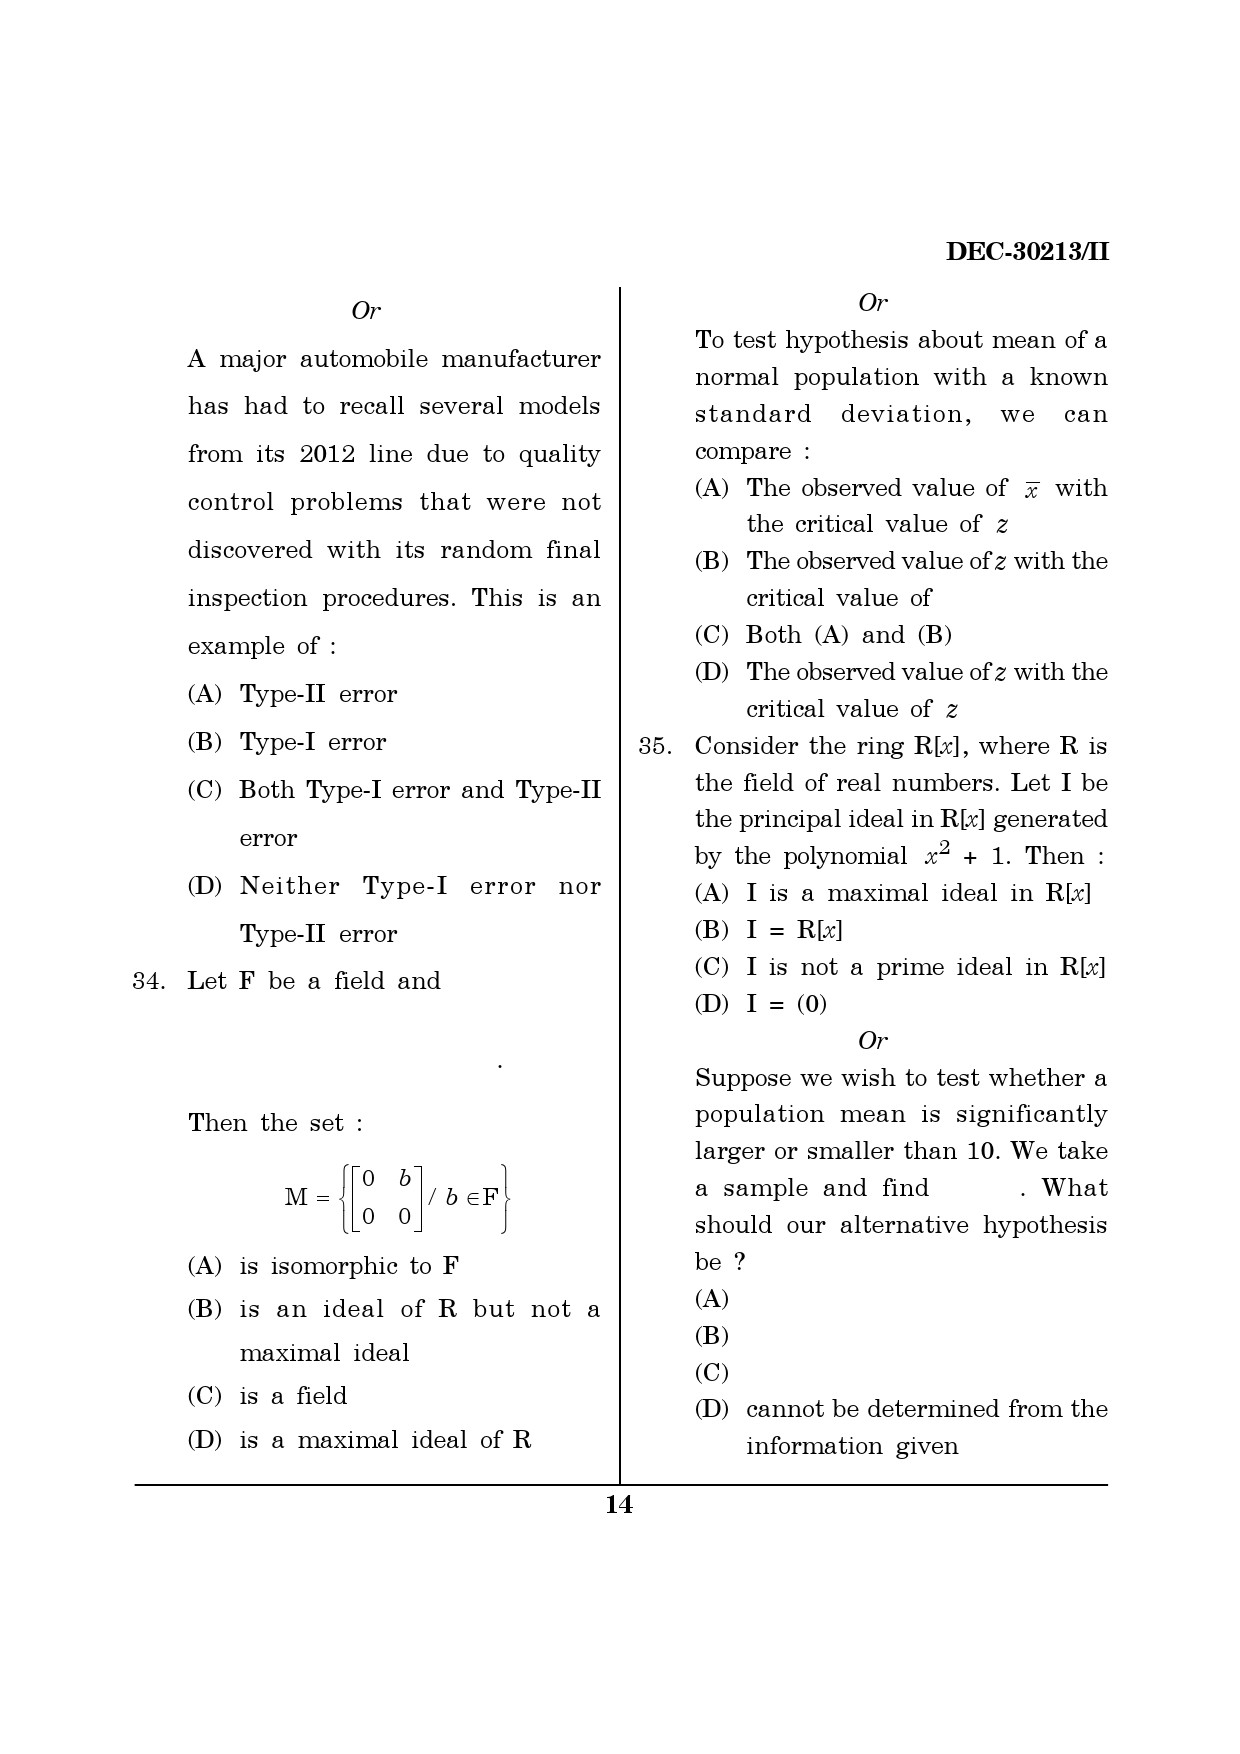 Maharashtra SET Mathematical Sciences Question Paper II December 2013 13